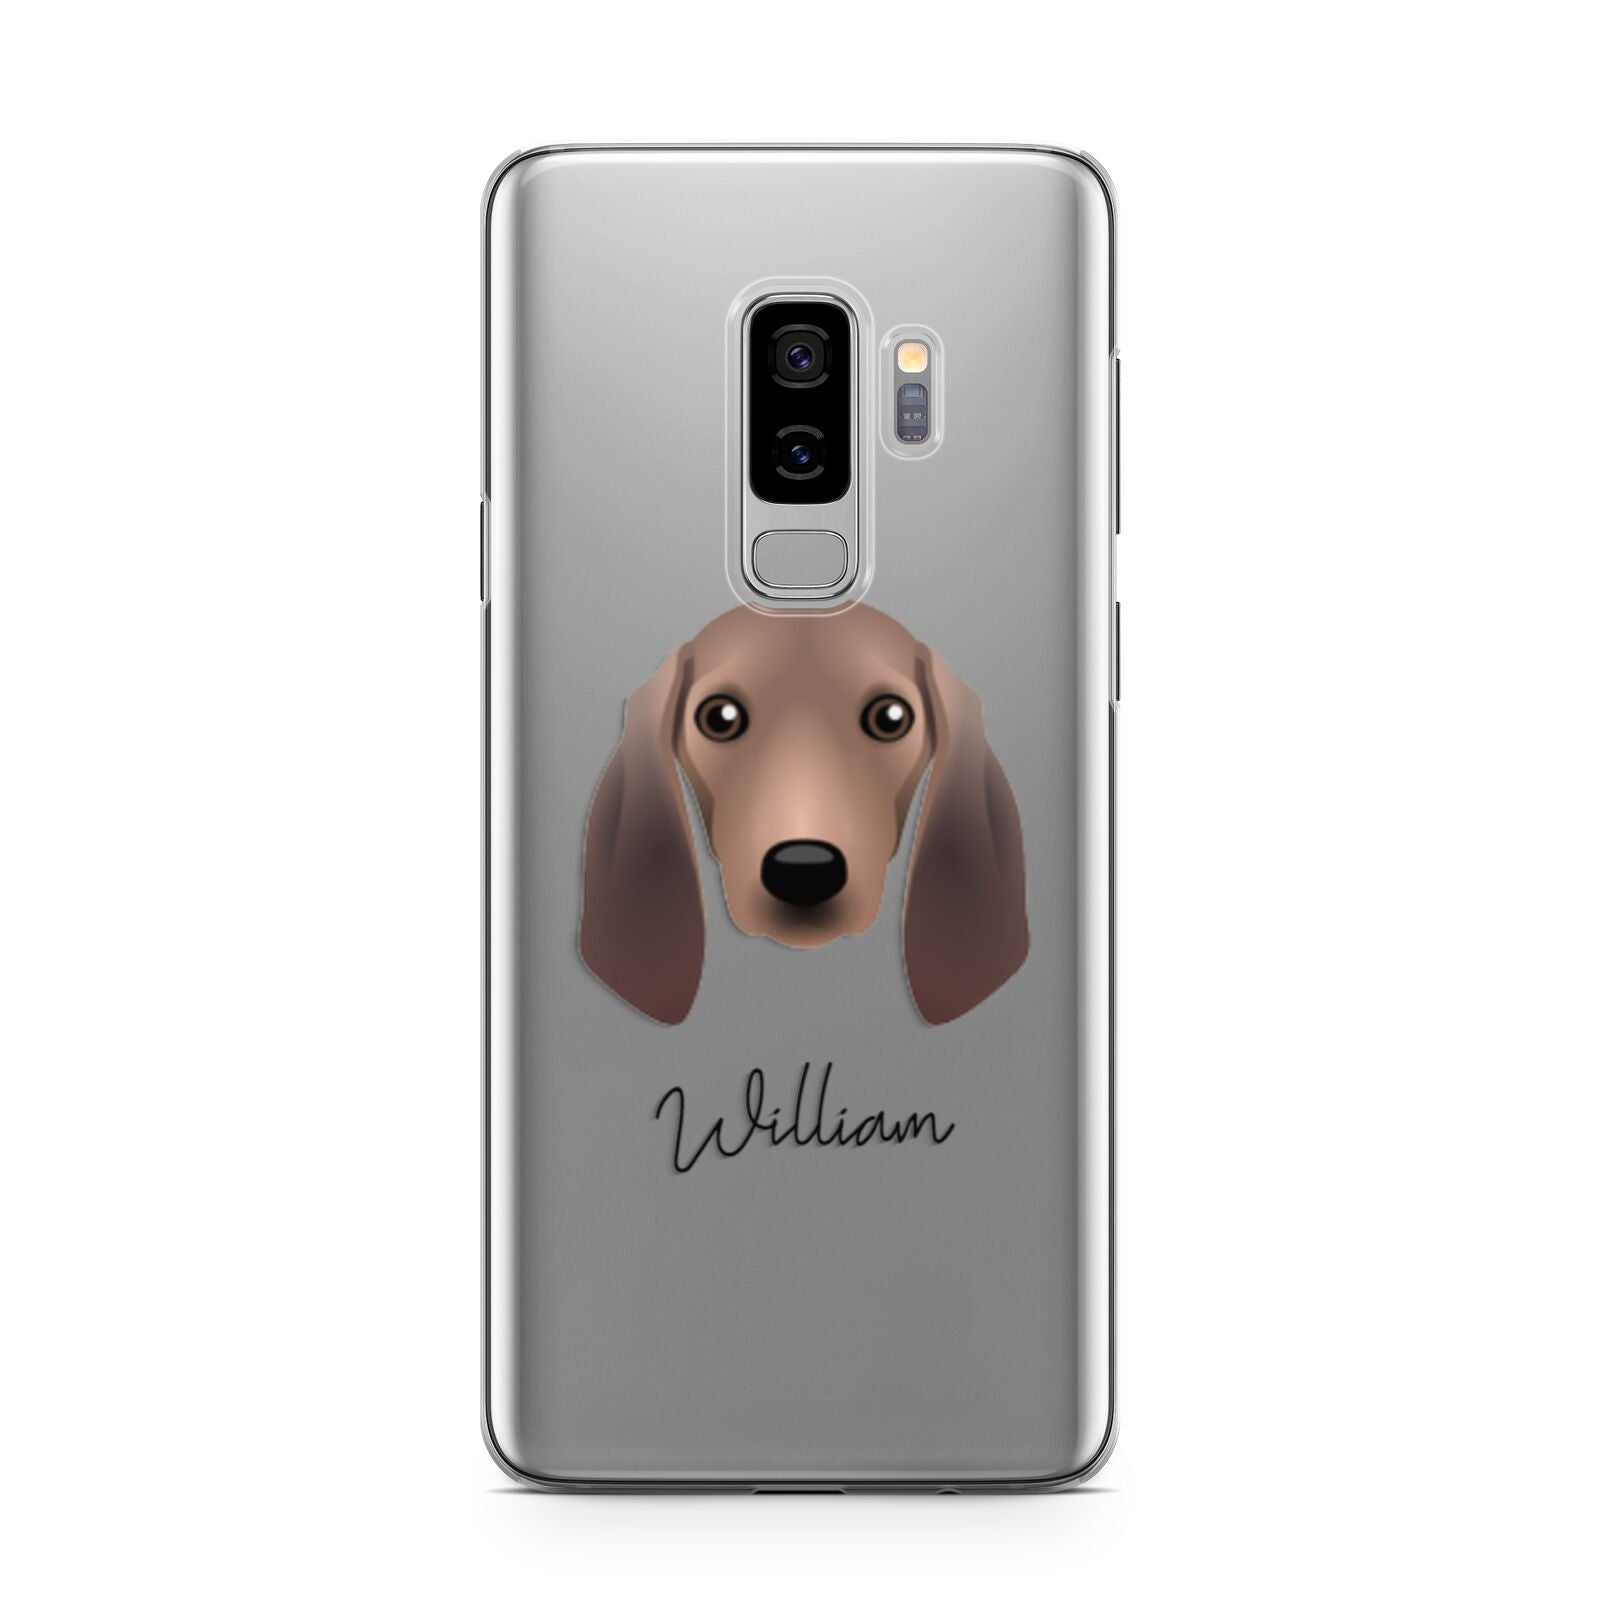 Segugio Italiano Personalised Samsung Galaxy S9 Plus Case on Silver phone